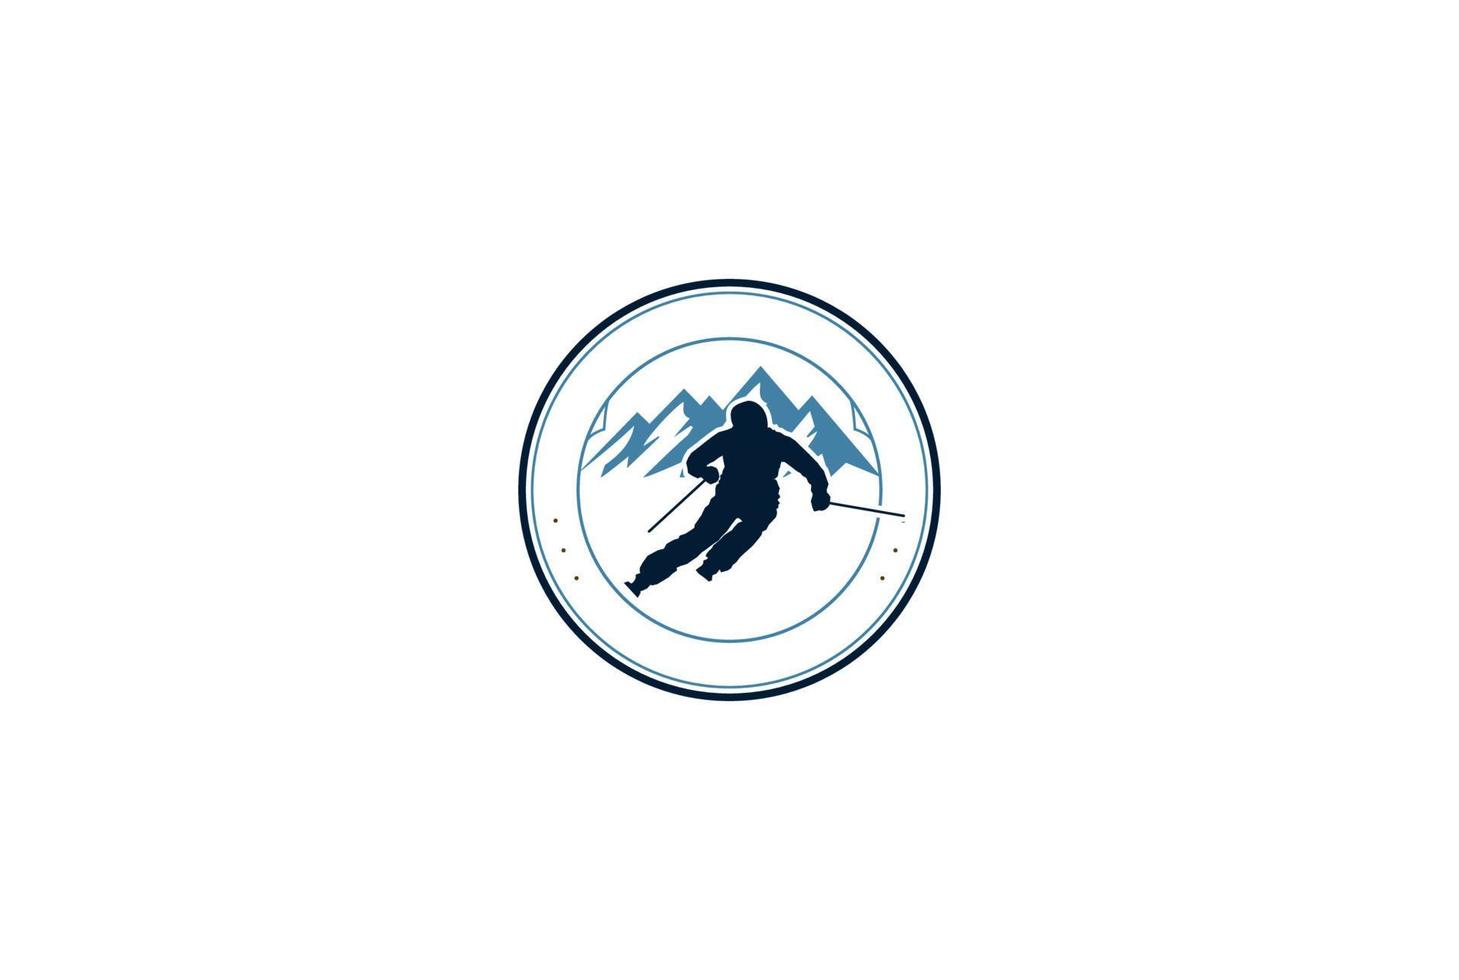 vintage retrò ghiaccio neve montagna snowboard sci sport club logo design vettoriale